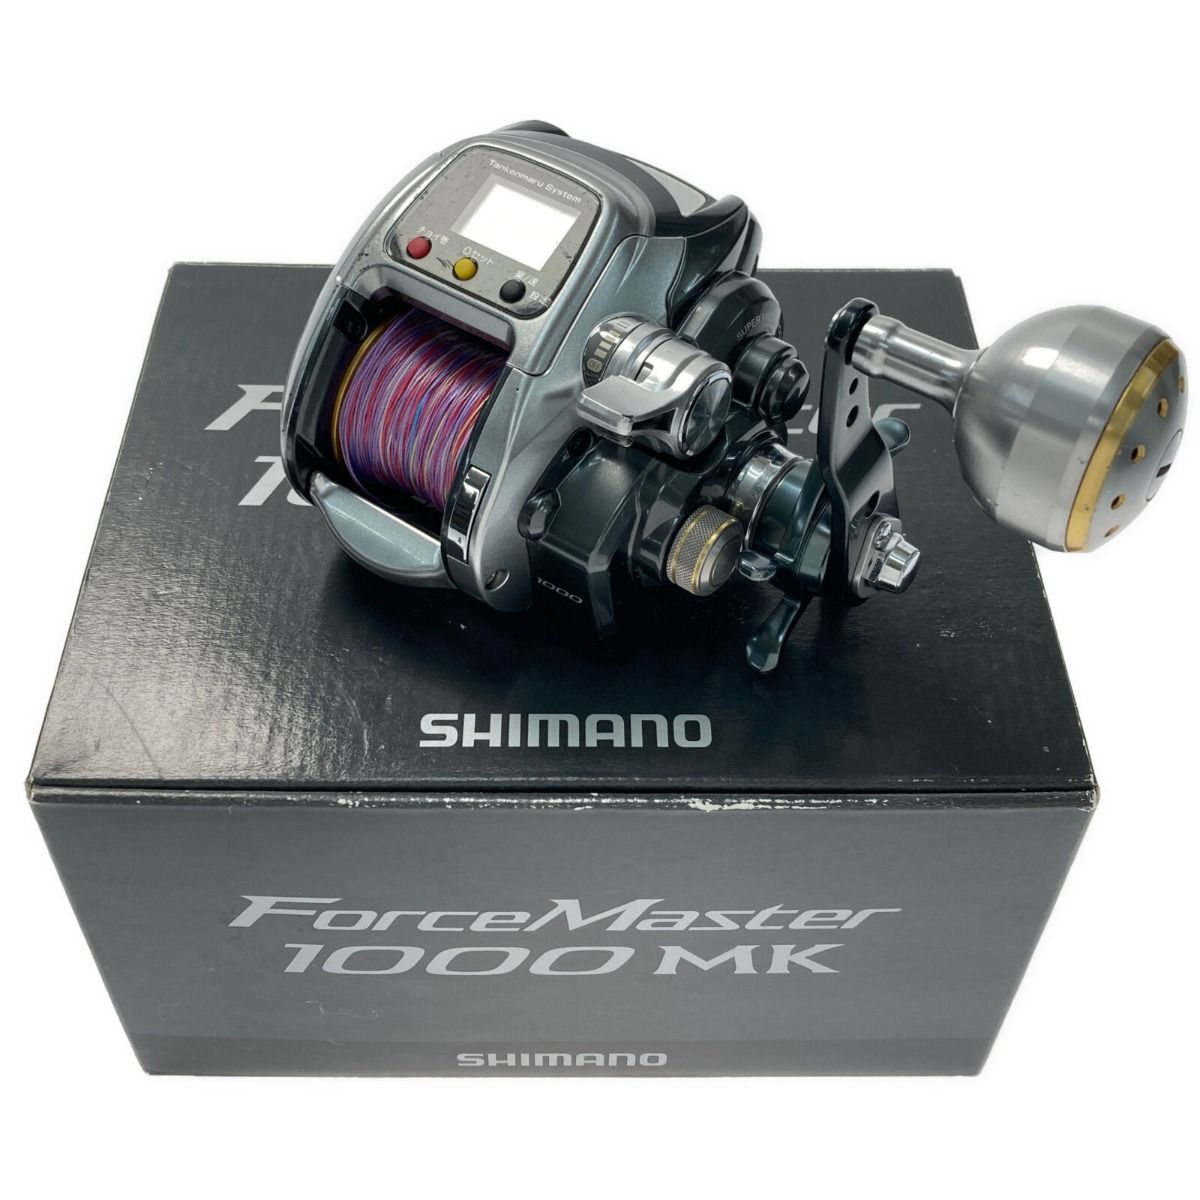 SHIMANO フォースマスター 1000MK HD-